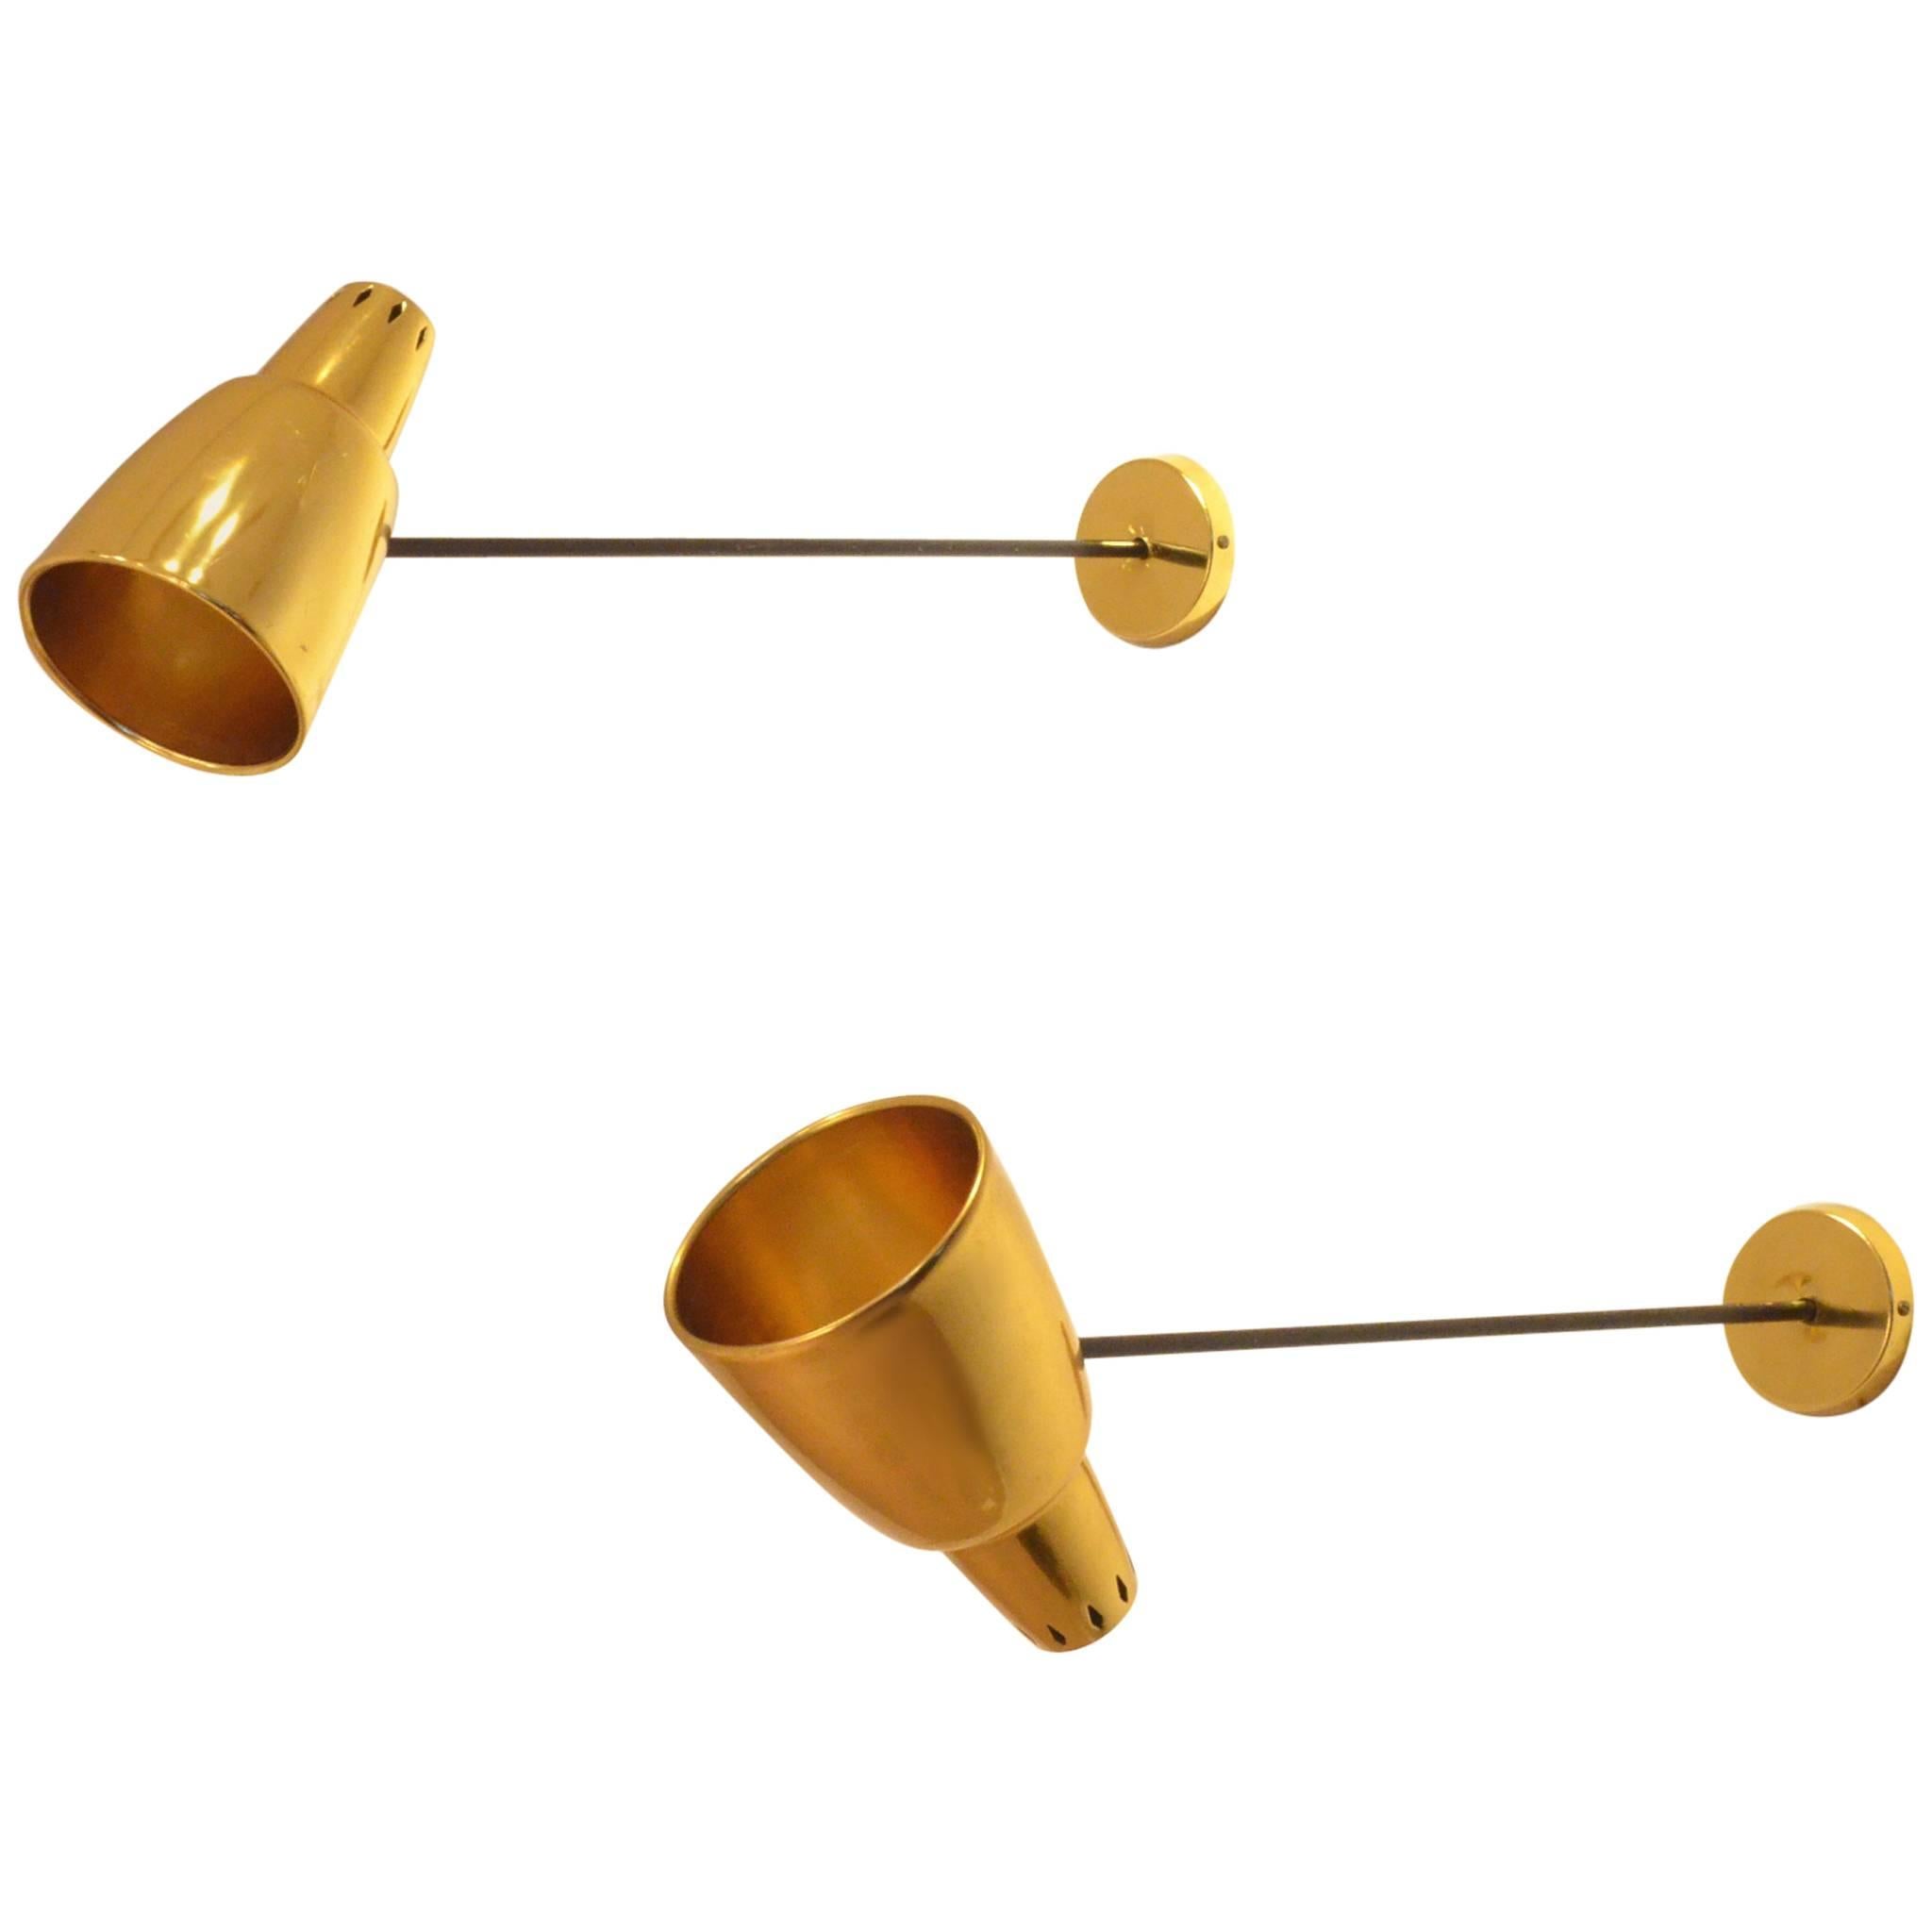 Two French Design Luminalite Golden Aluminium Metal Arm Lamps Sconces For Sale